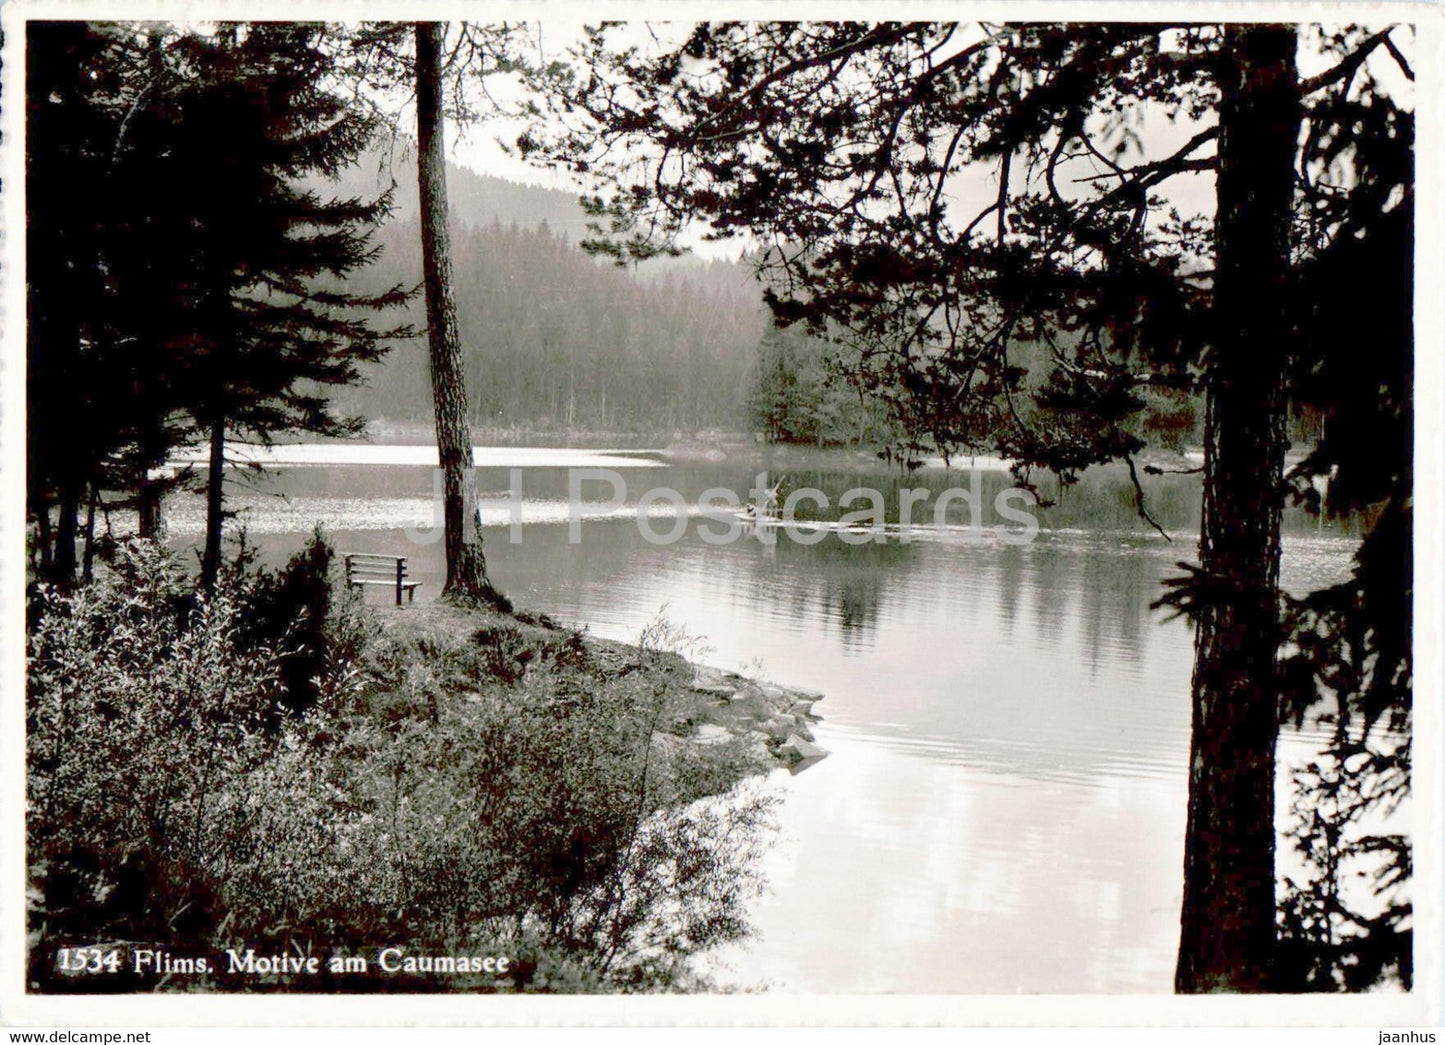 Flims - Motive am Caumasee - 1534 - old postcard - 1947 - Switzerland - used - JH Postcards